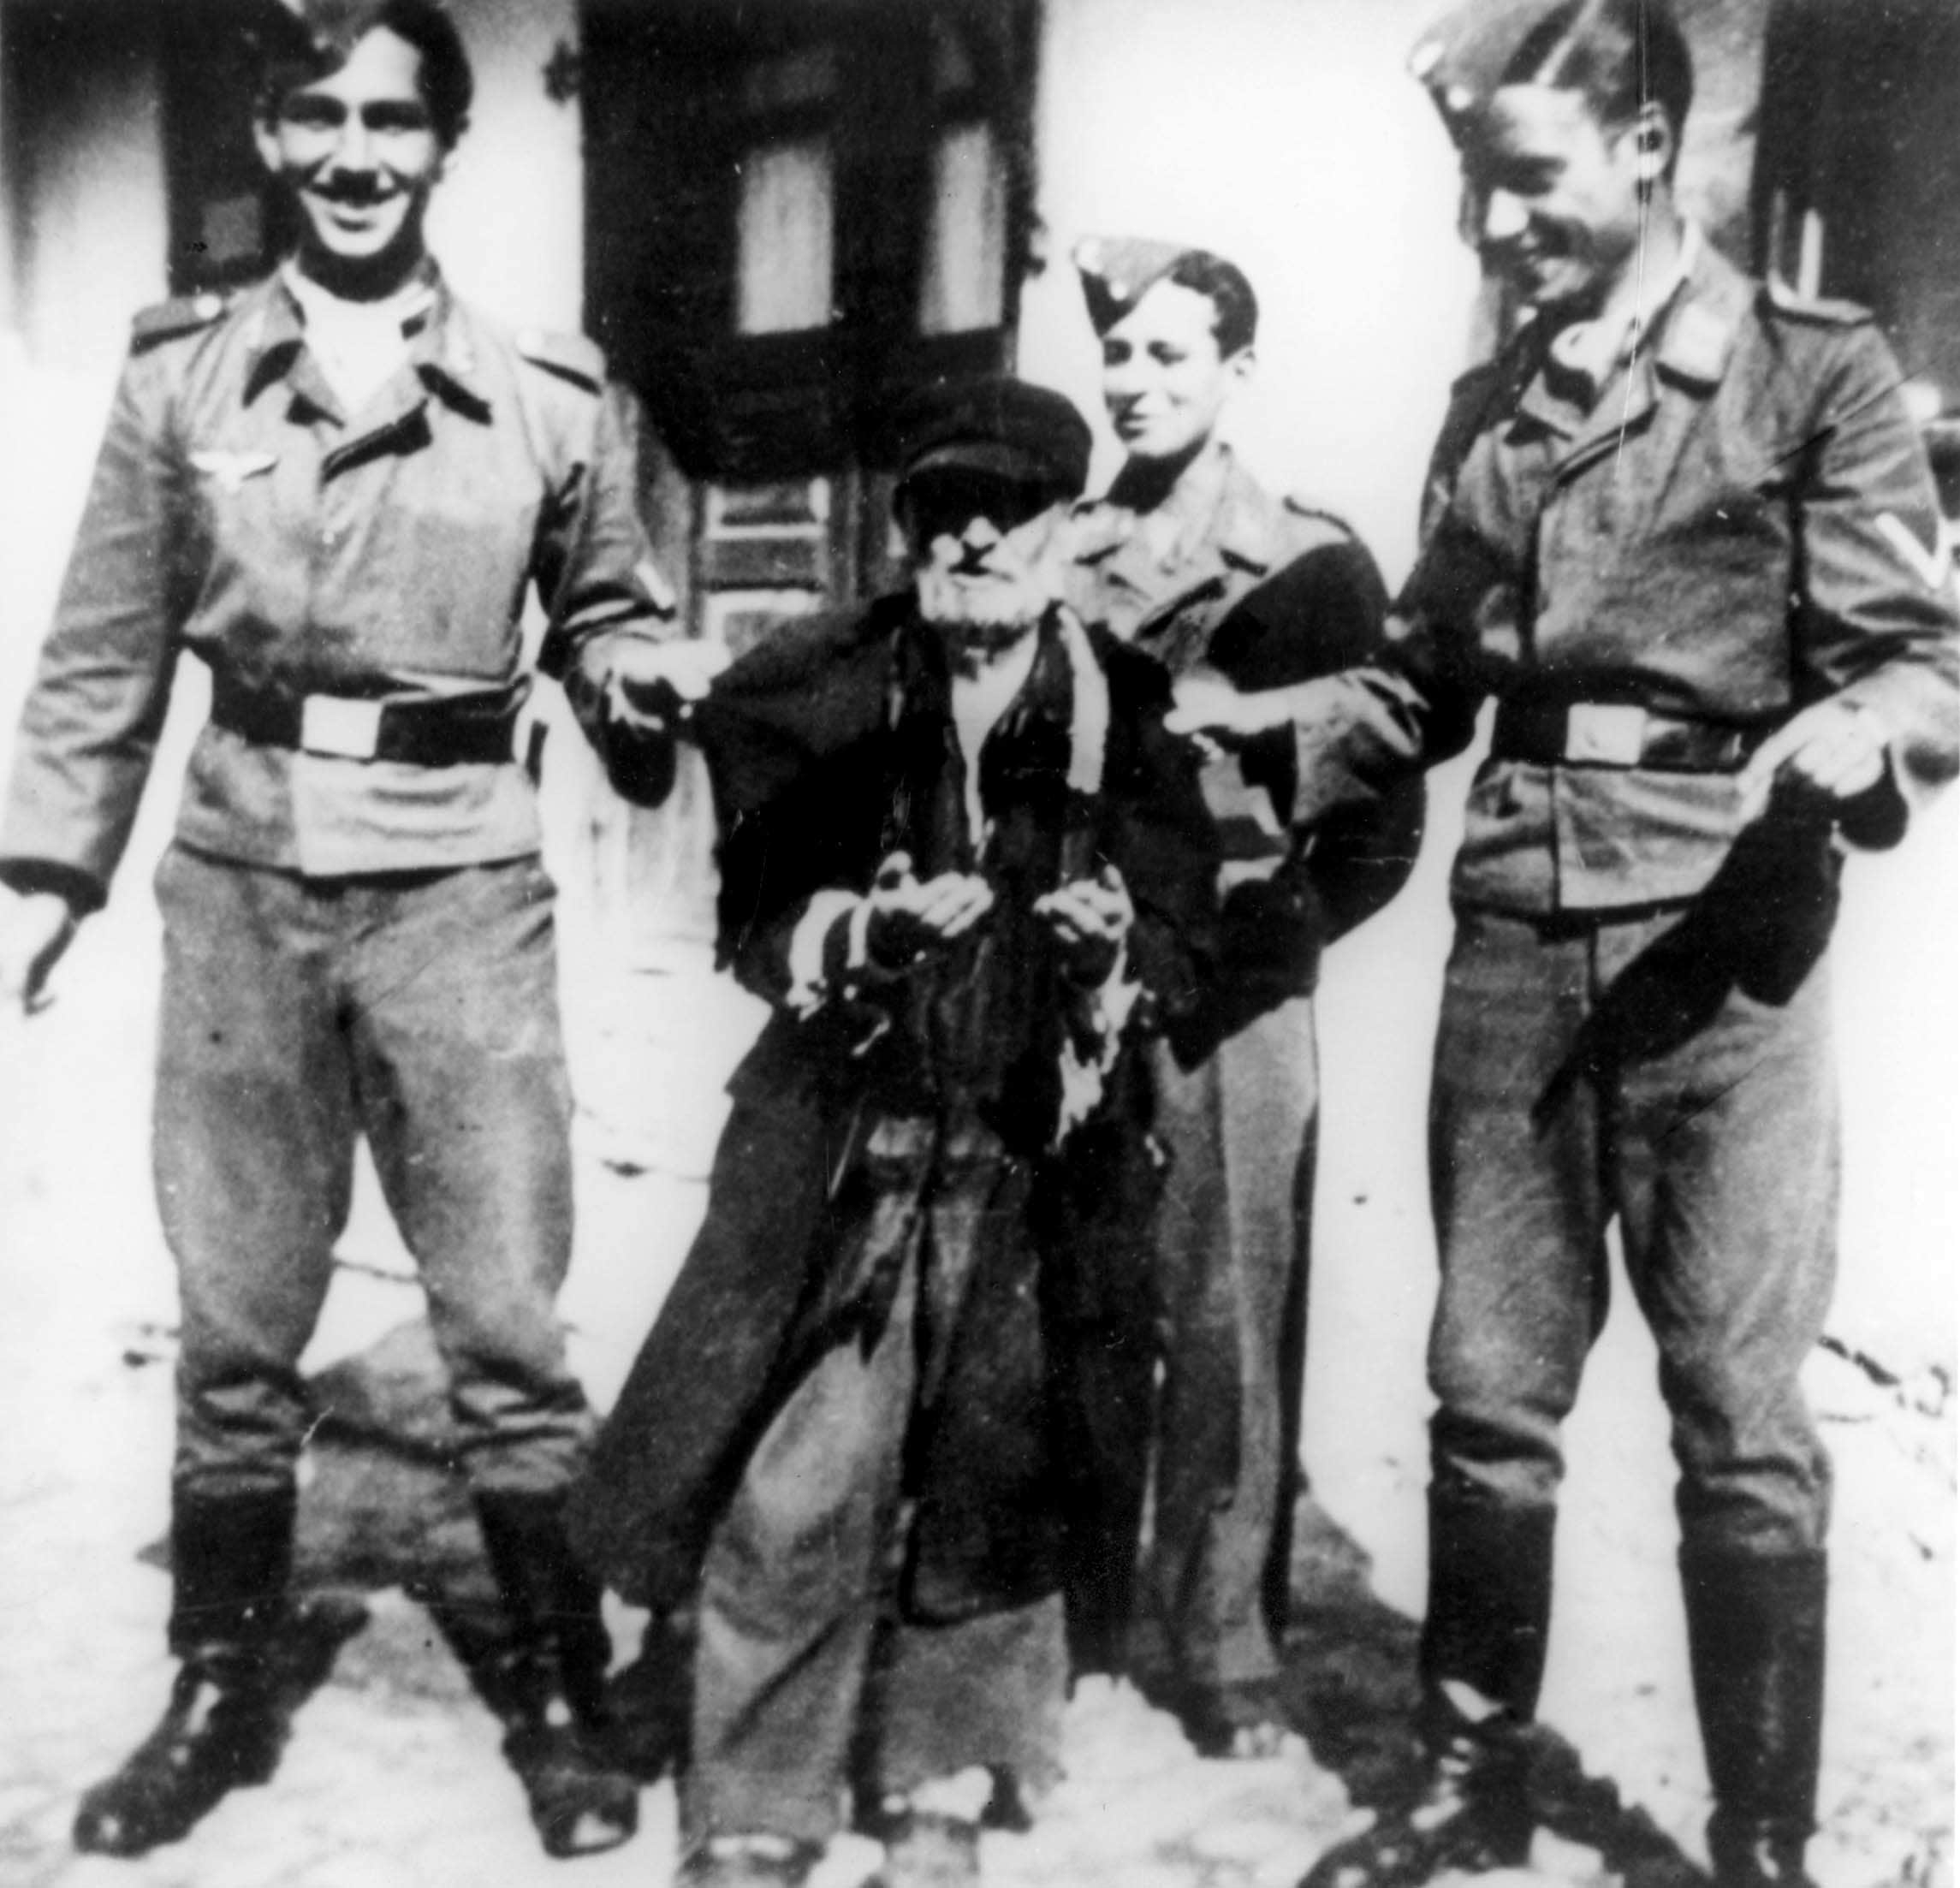 Three German air force men humilitating an elderly Jew, summer of 1941